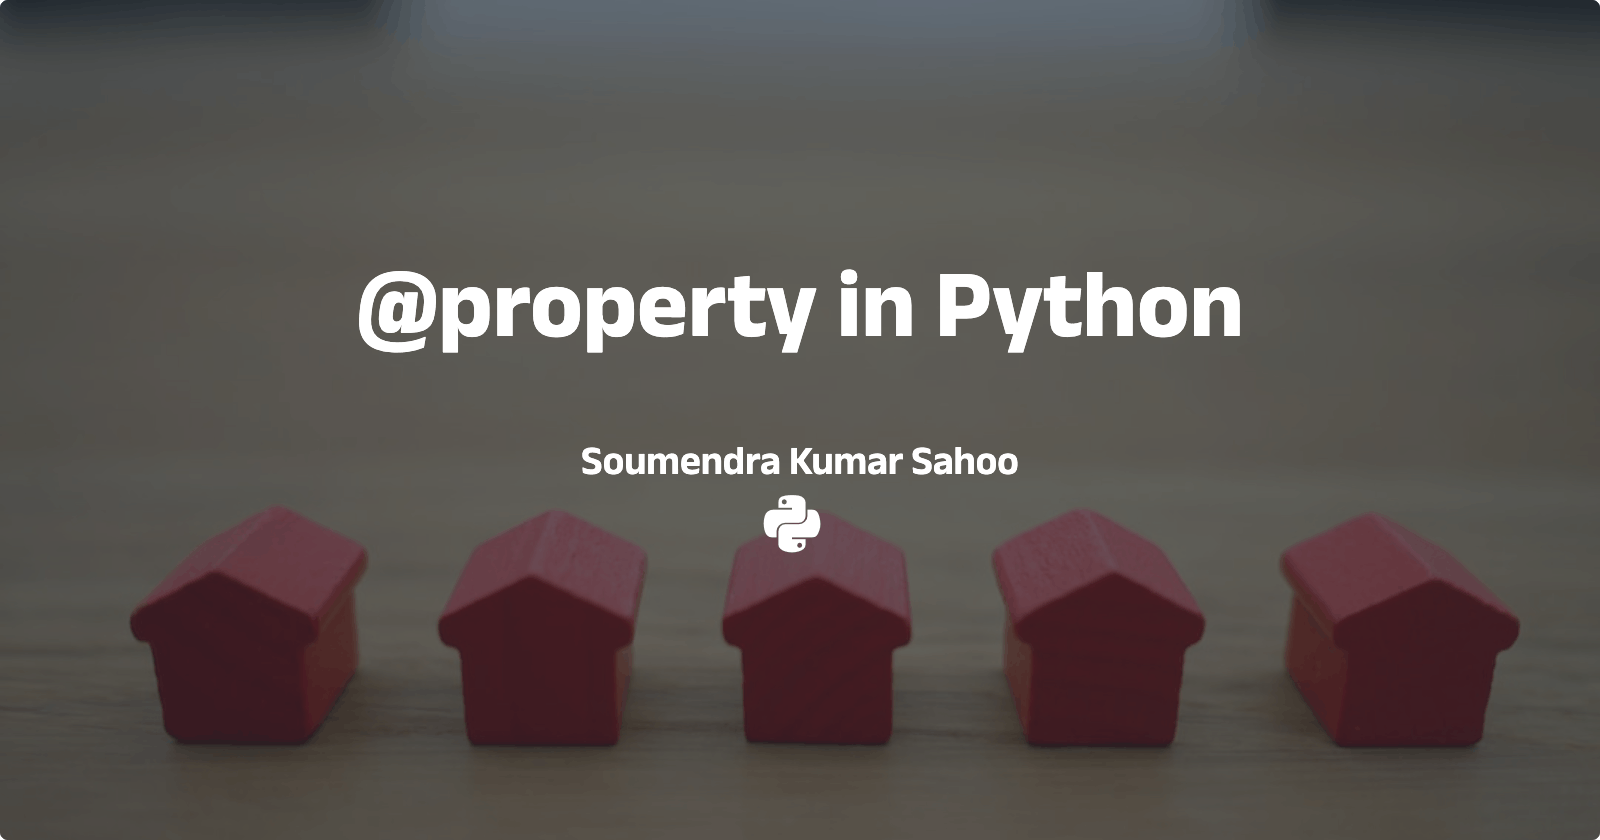 @property in Python